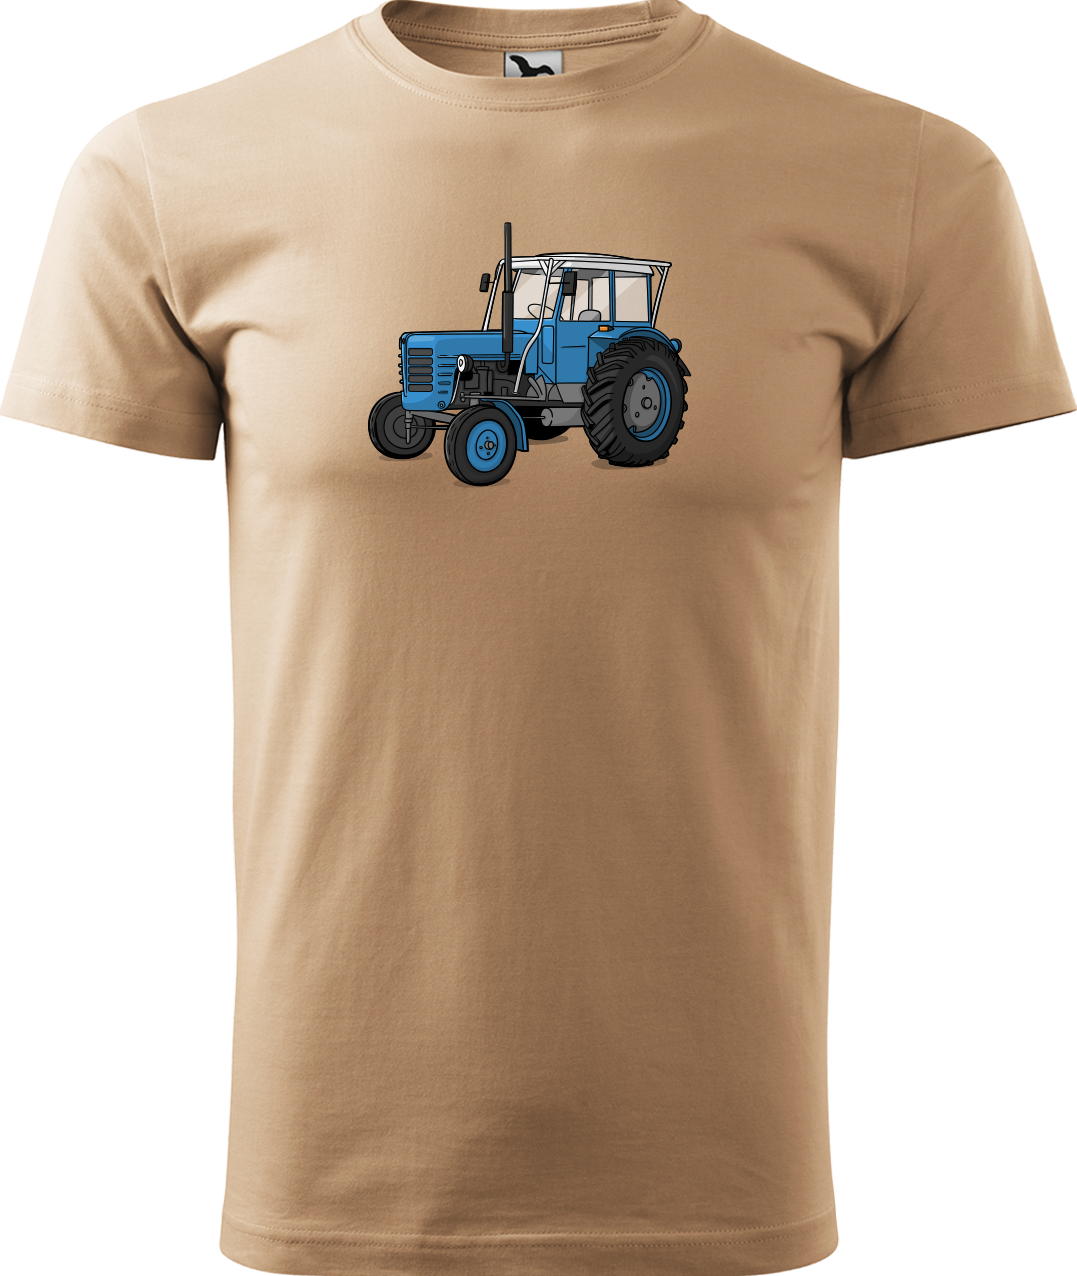 Tričko s traktorem - Starý traktor Velikost: S, Barva: Písková (08)